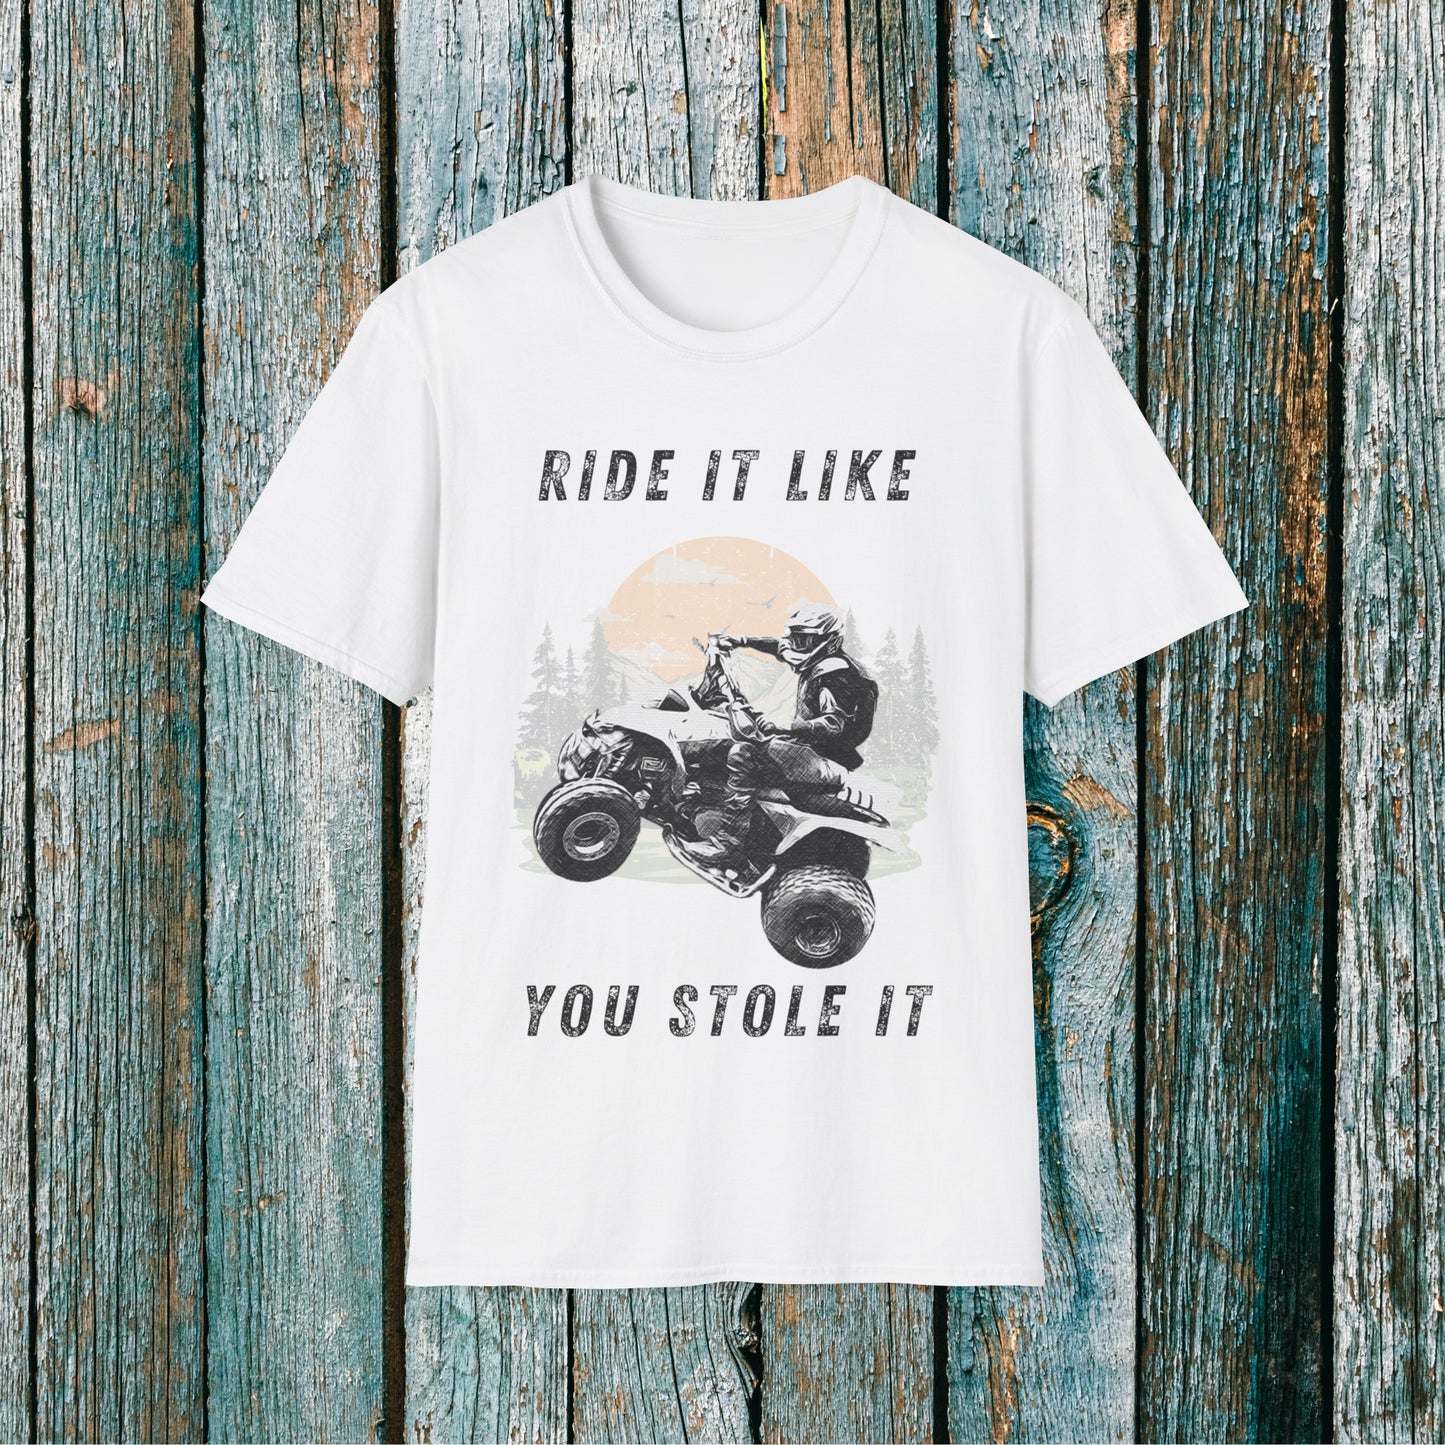 Mens ATV Shirt | Ride It Like You Stole It Man on Honda 400 EX ATV | SOFT Cotton Adult Unisex tee shirt | Four Wheeler shirt for men | Cool ATV shirt for boys